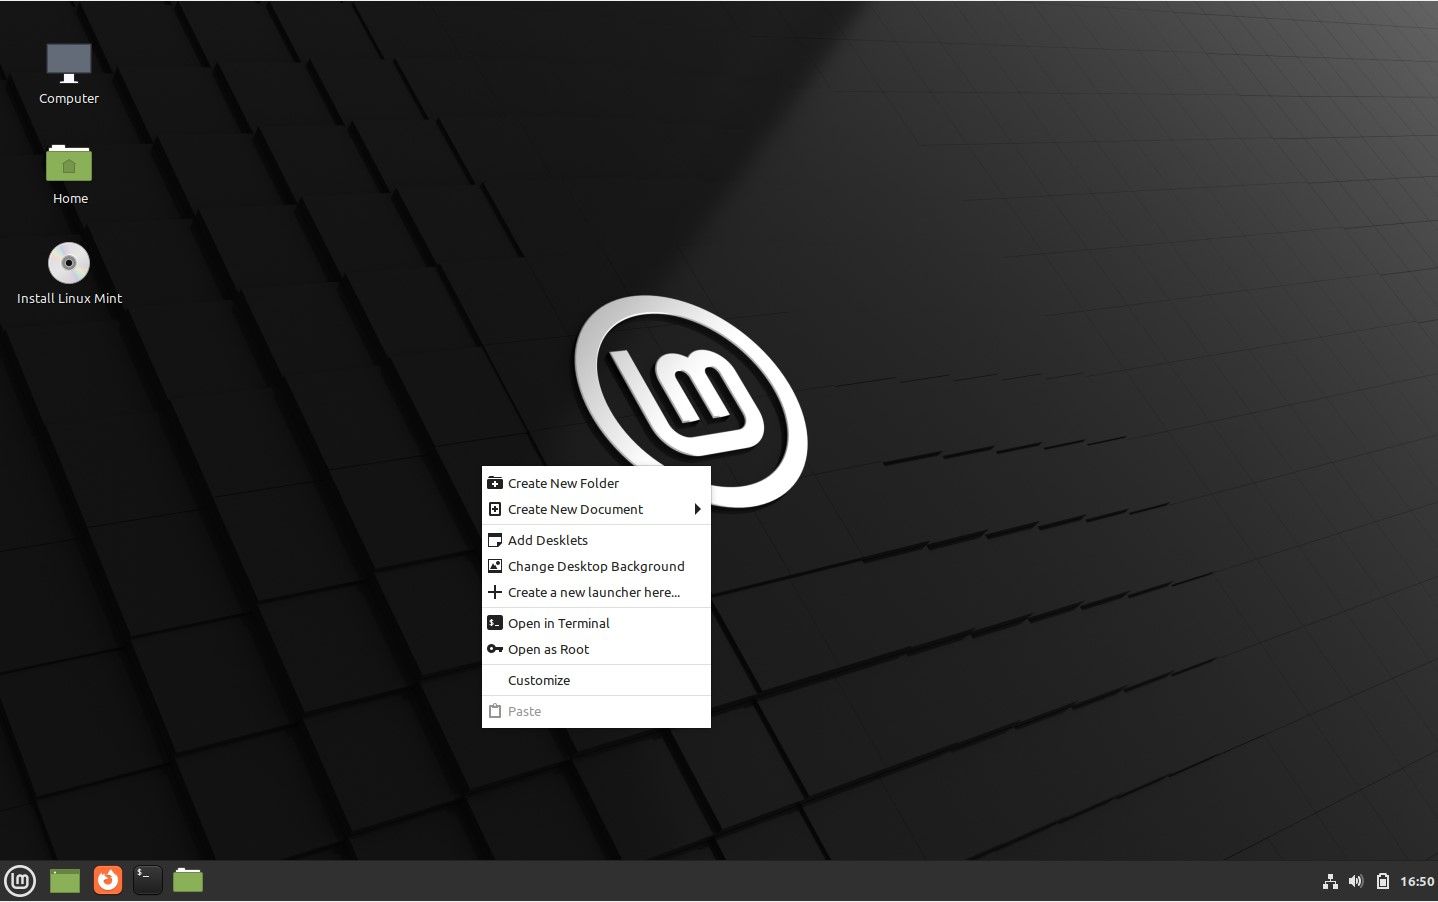 Linux Mint desktop interface